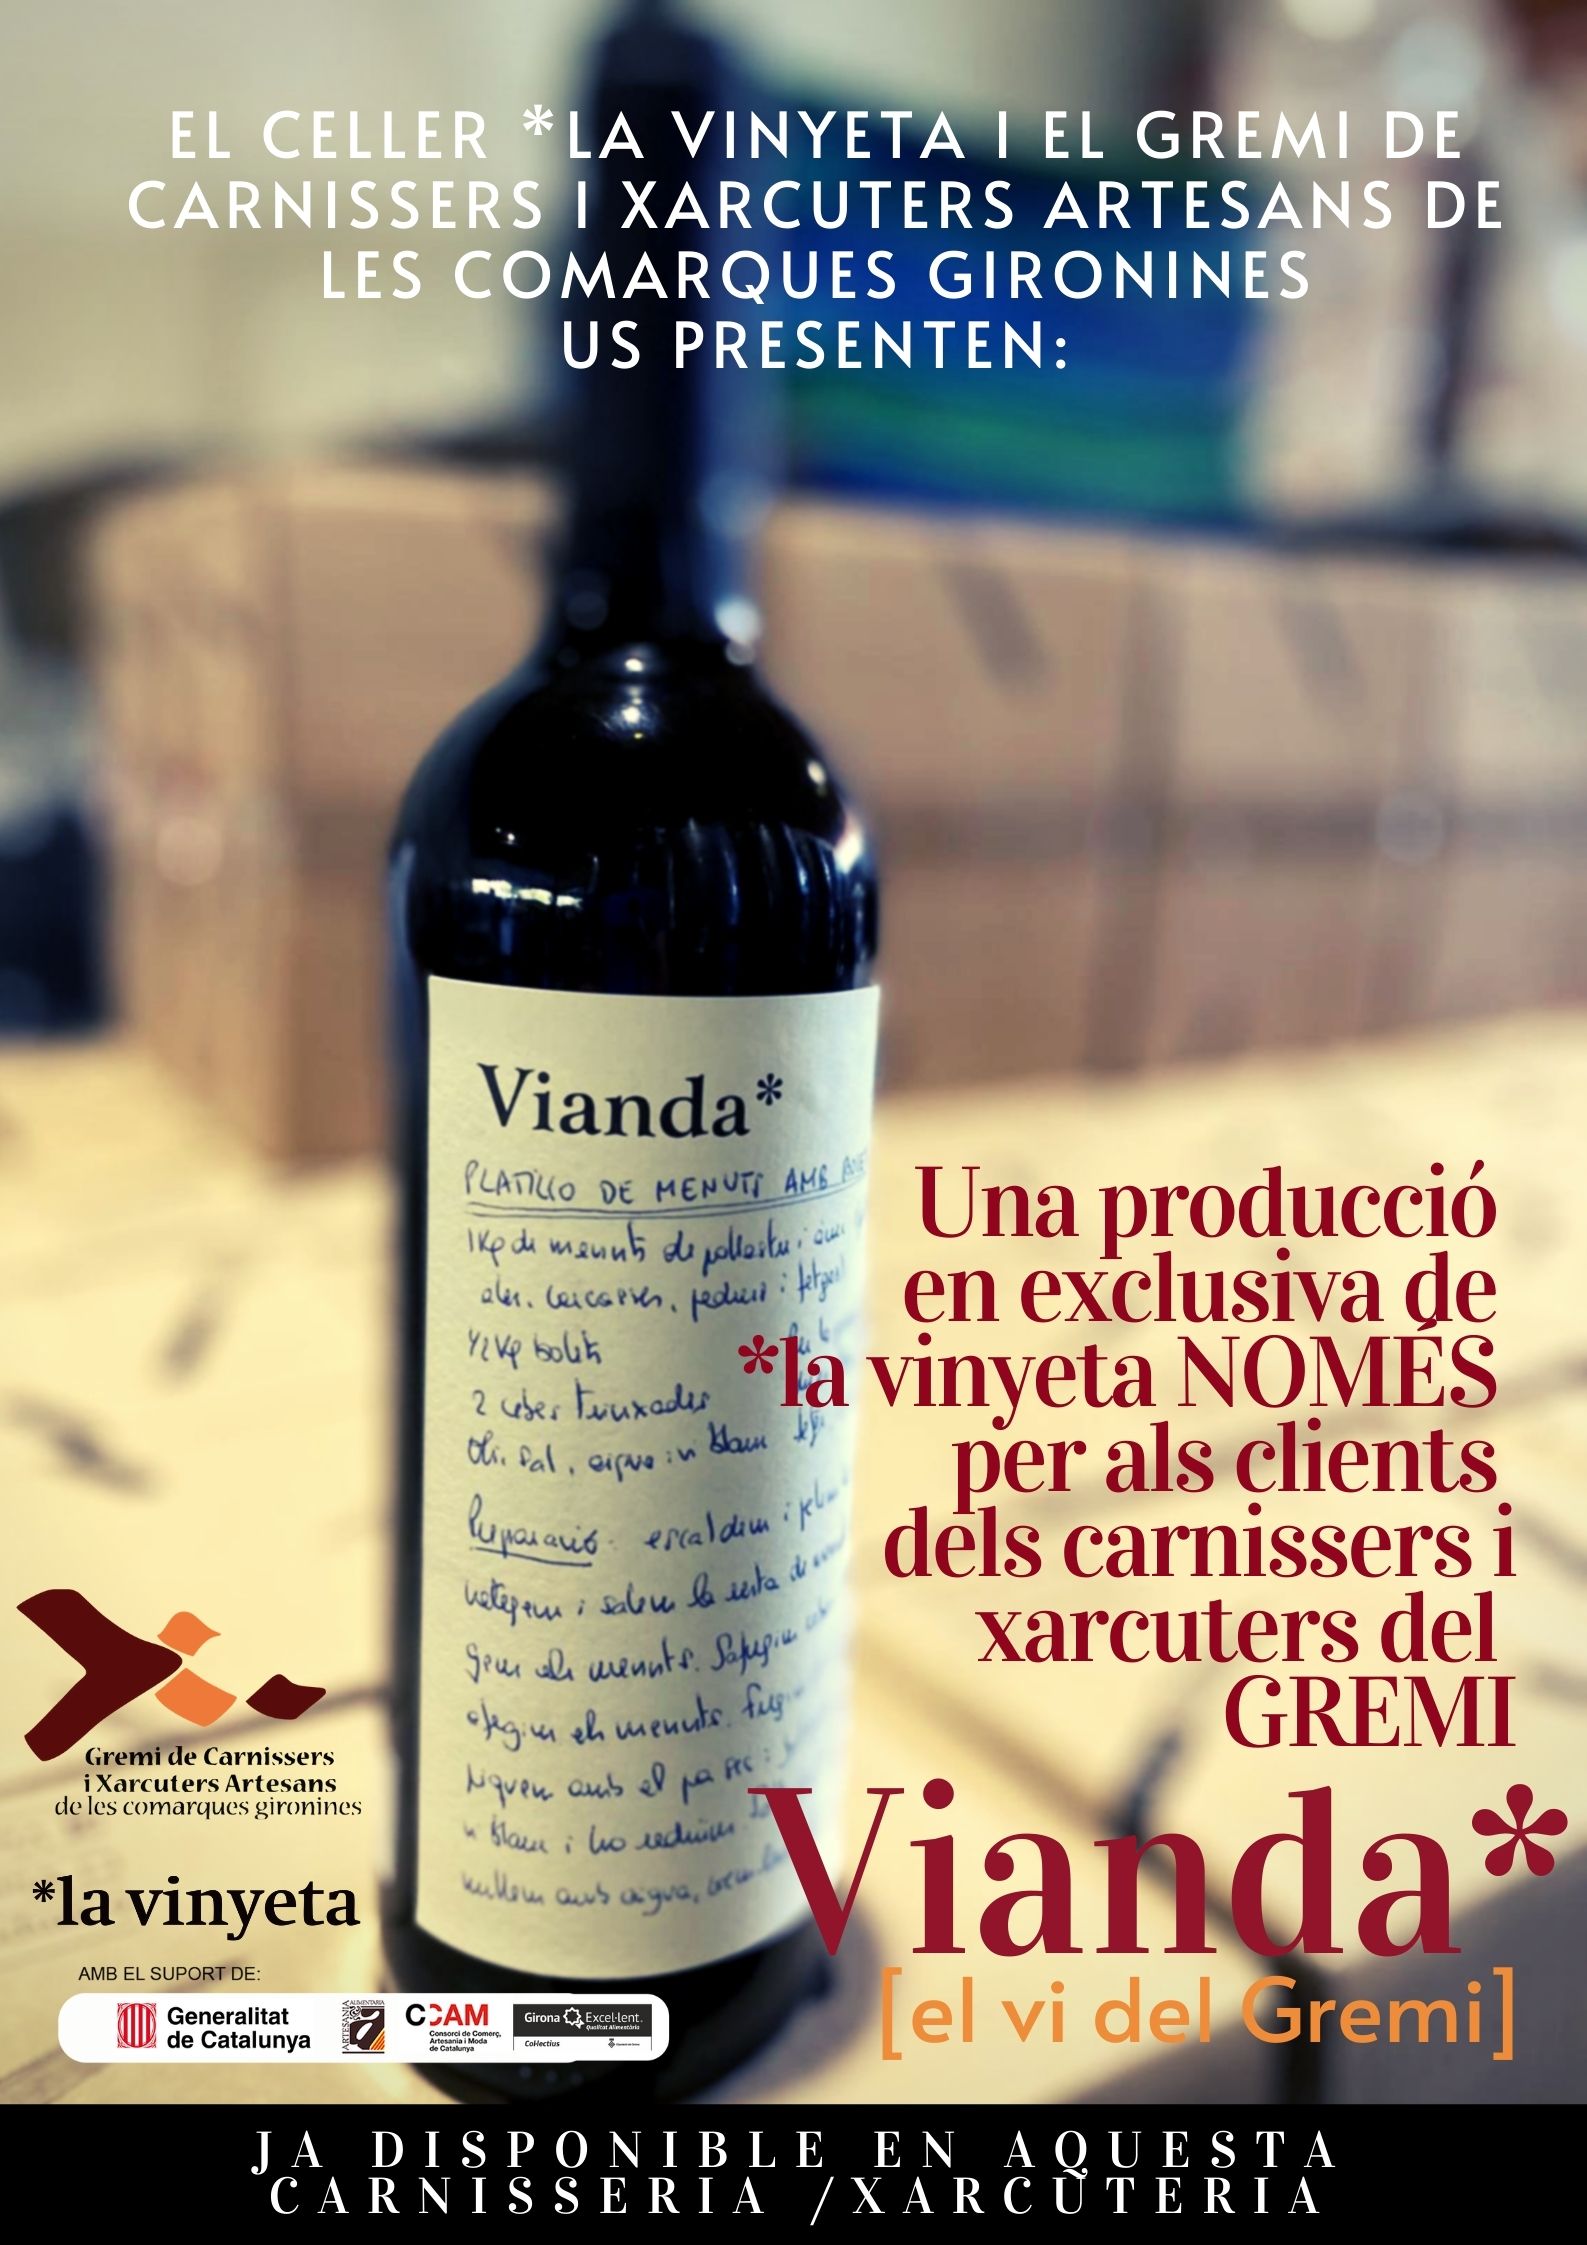 Vianda* - el vi del Gremi de Carnissers